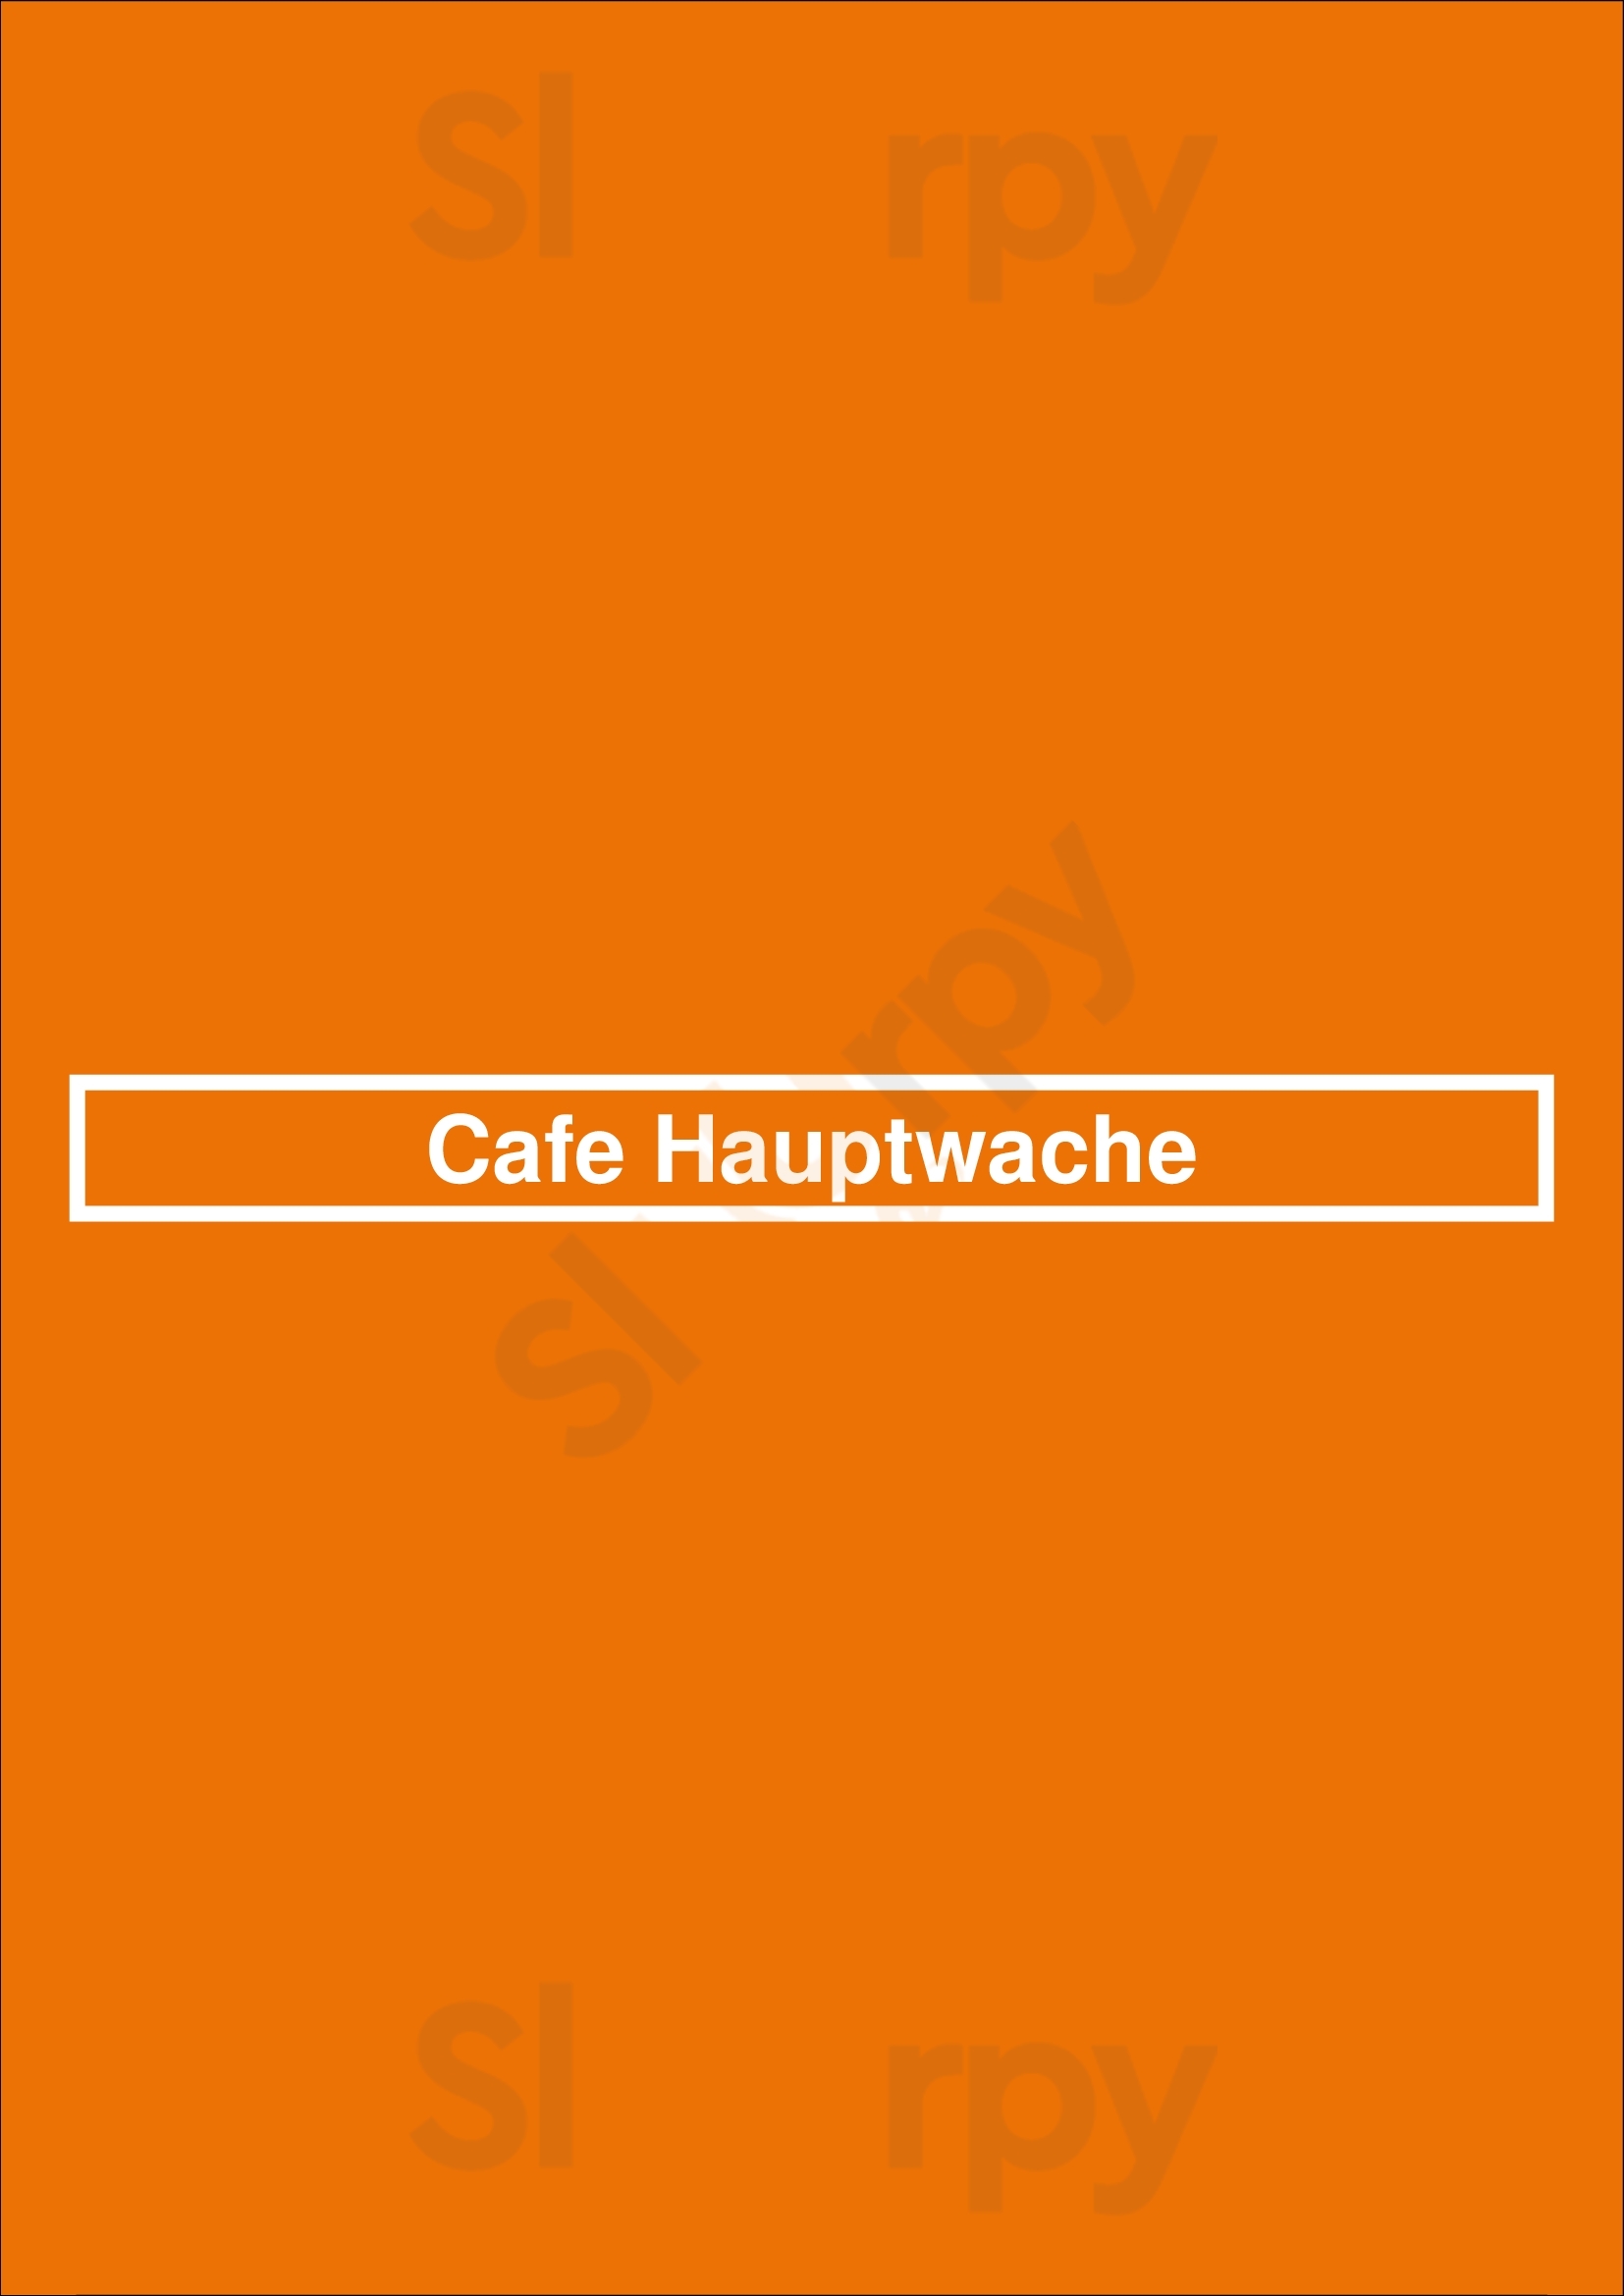 Cafe Hauptwache Frankfurt am Main Menu - 1